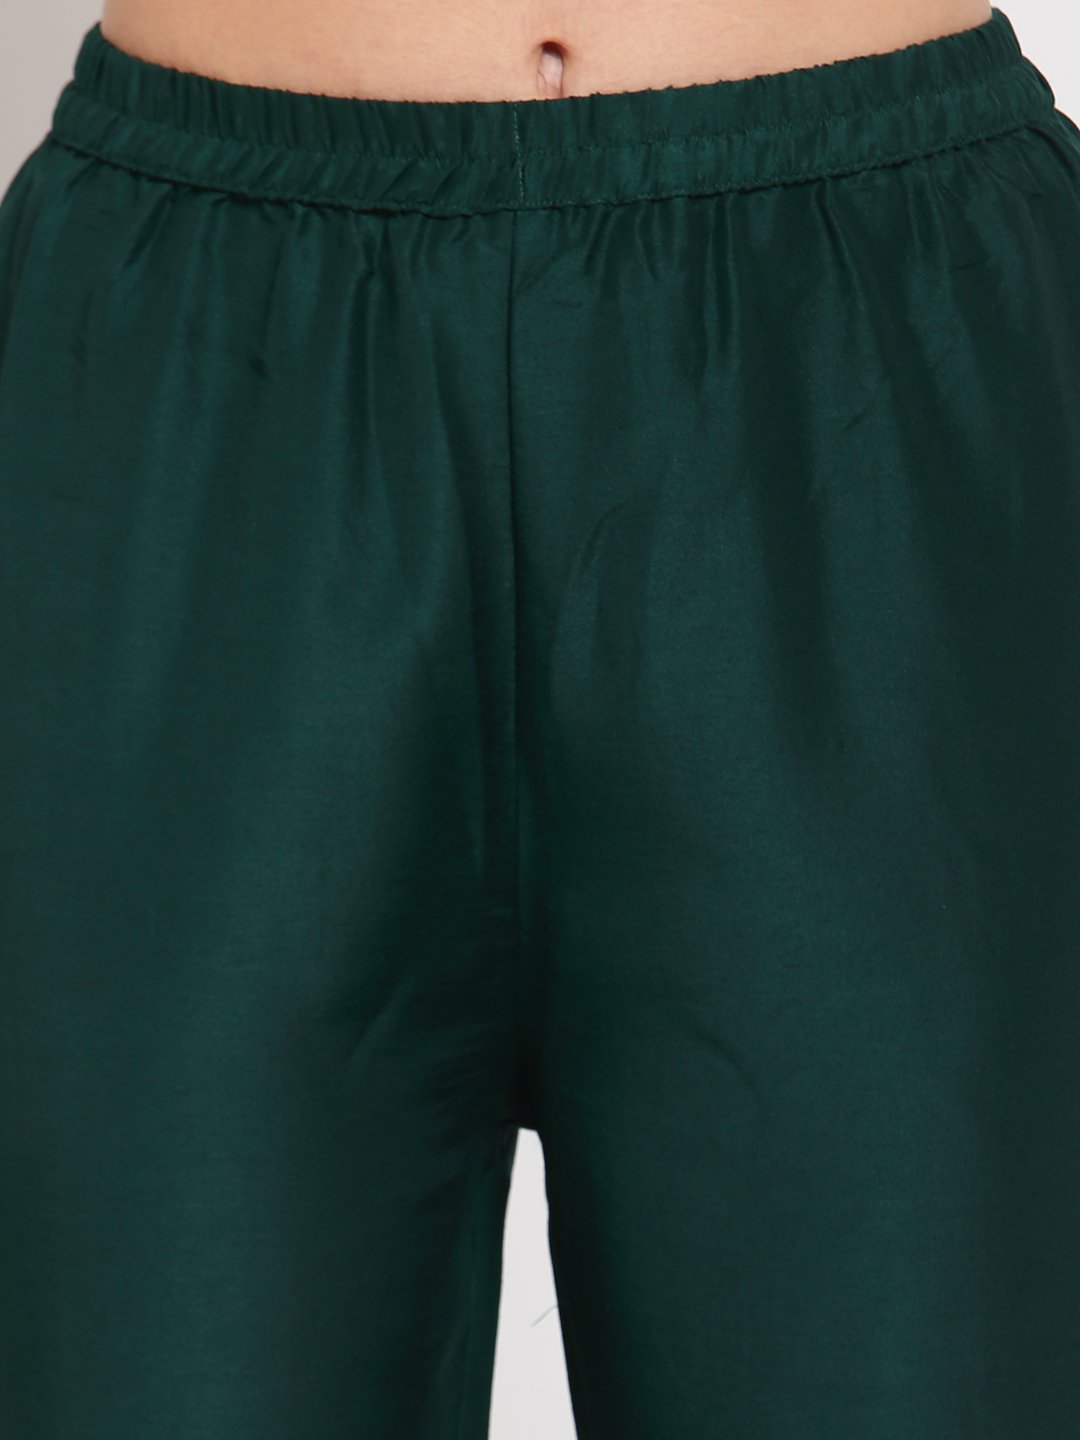 Women's Green Solid Cotton 3/4 Sleeve Mandarin Neck Casual Kurta Pant Dupatta Set - Myshka